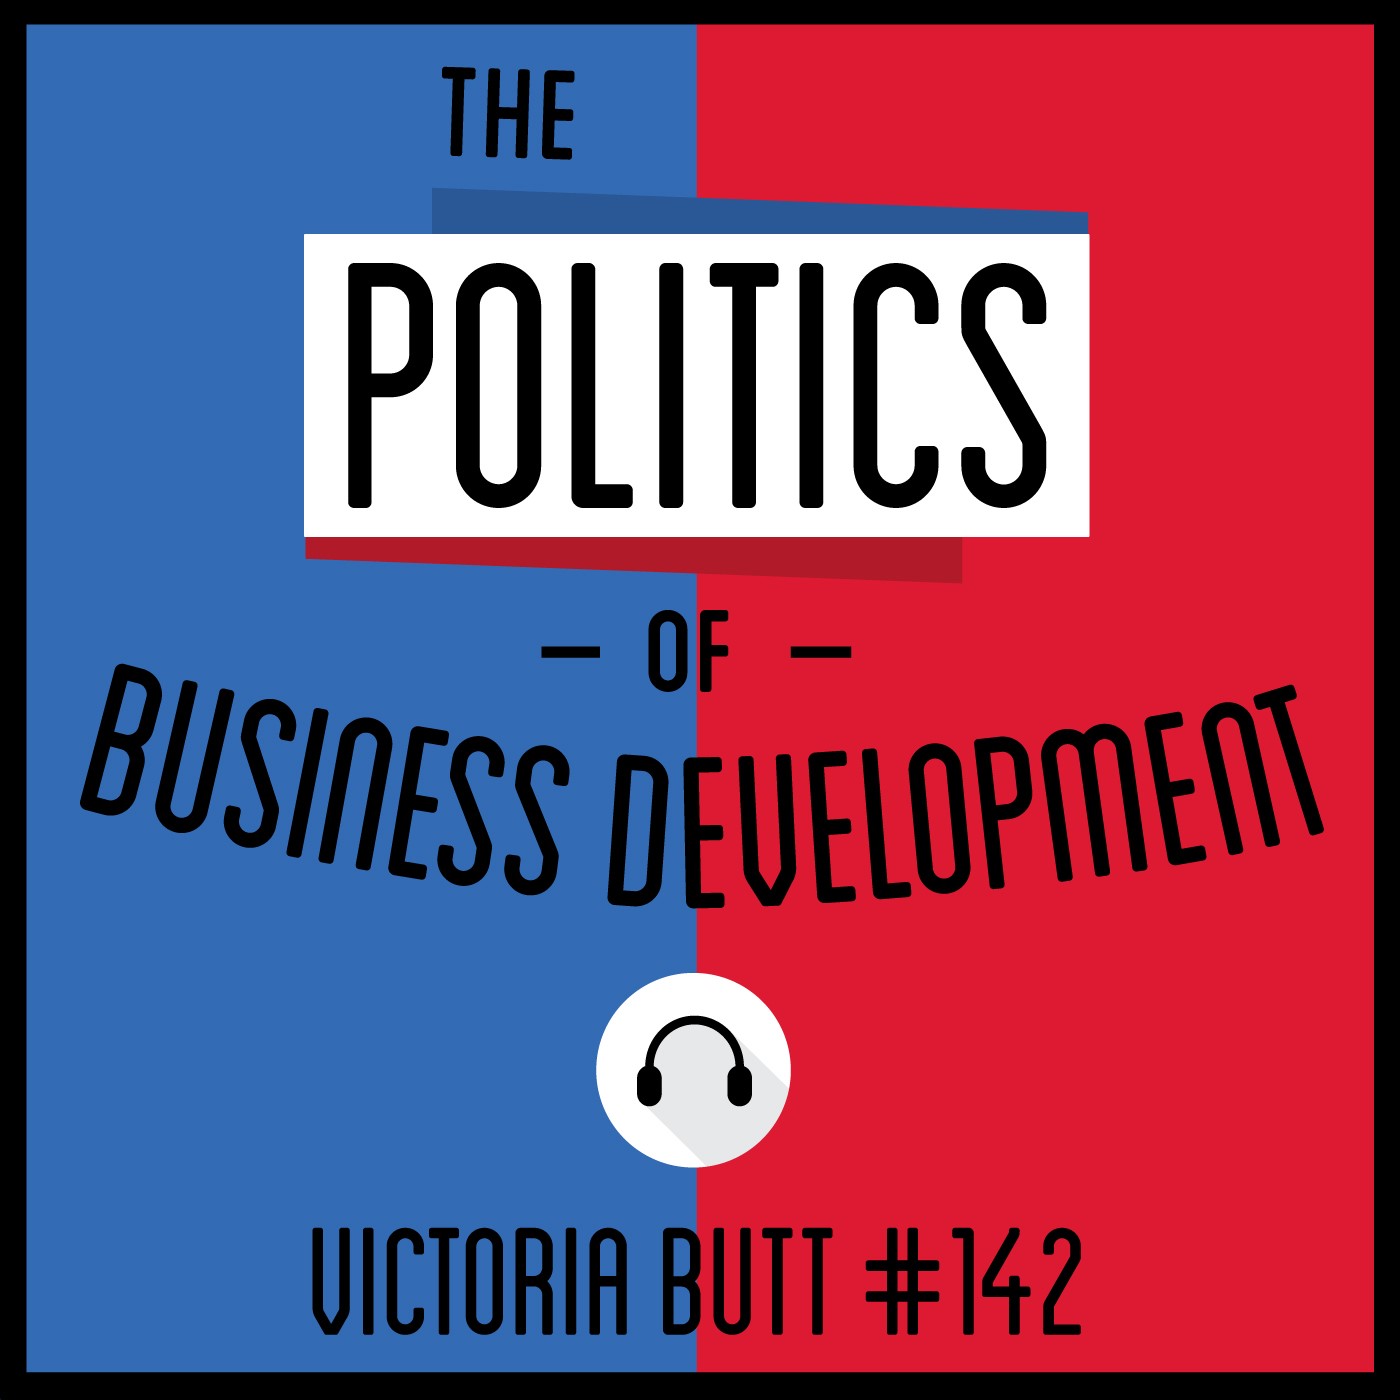 142: The Politics of Business Development - Victoria Butt